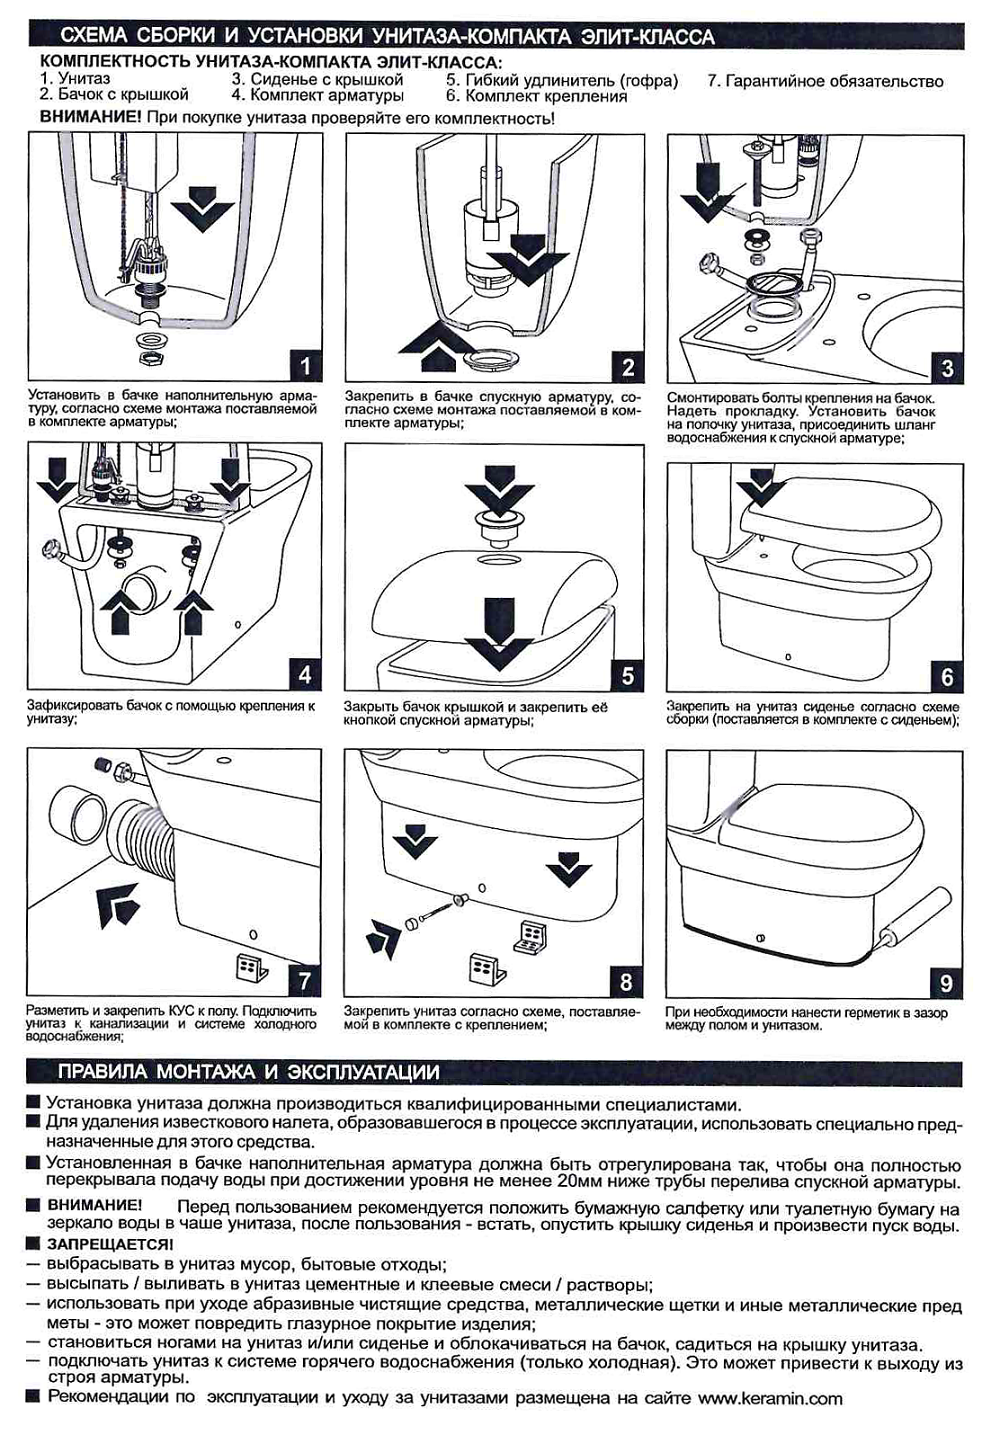 Схема сборки унитаза. Рекомендации по установке унитаза. Инструкция по эксплуатации унитаза. Инструкция по сборке туалета.